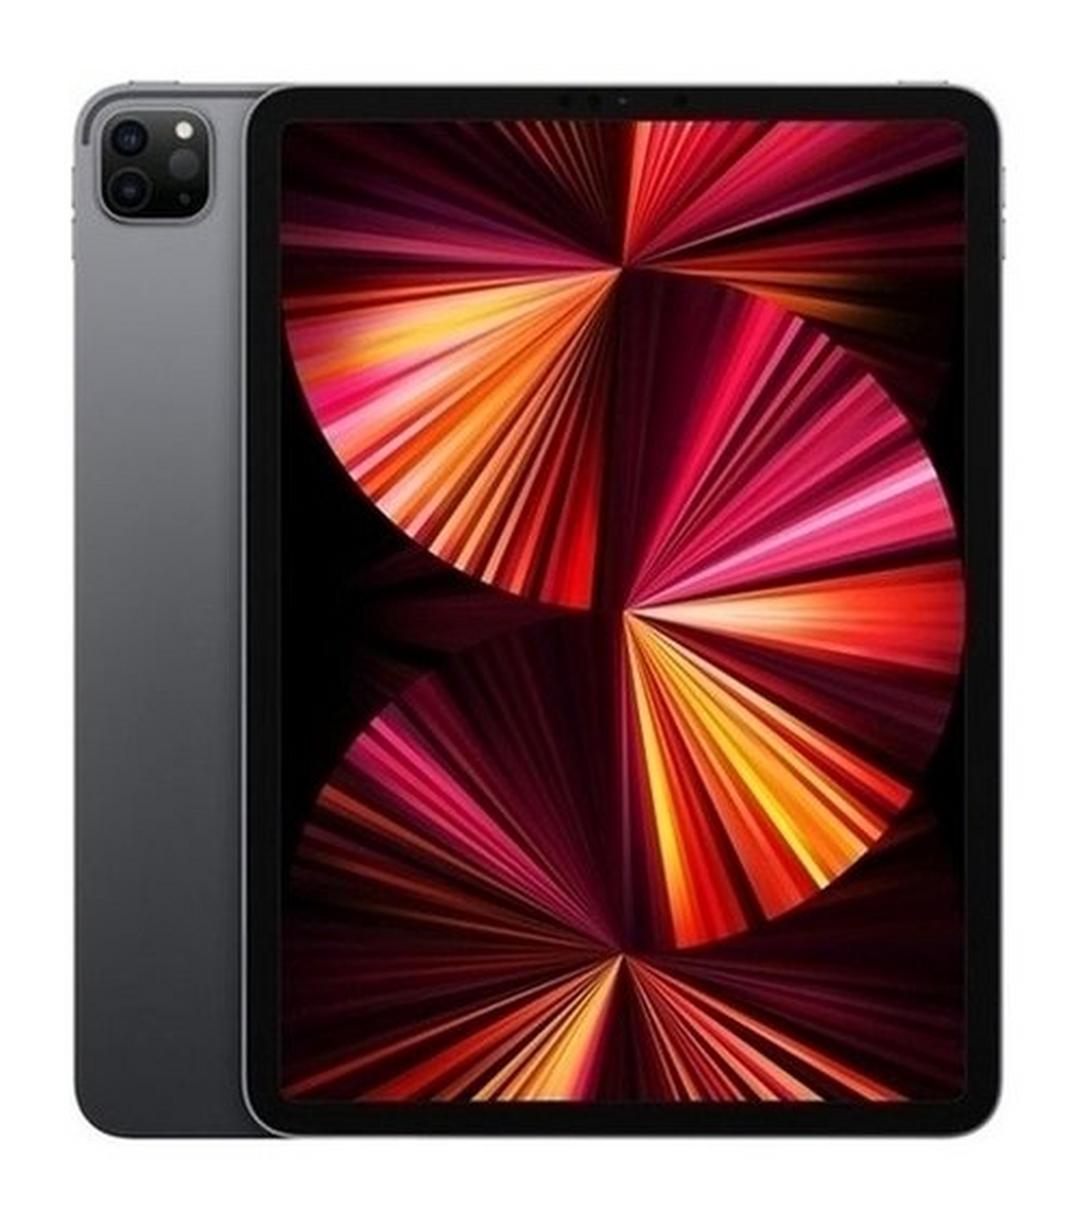 Apple iPad Pro 2021 M1 512GB Wifi 11-inch Tablet - Grey